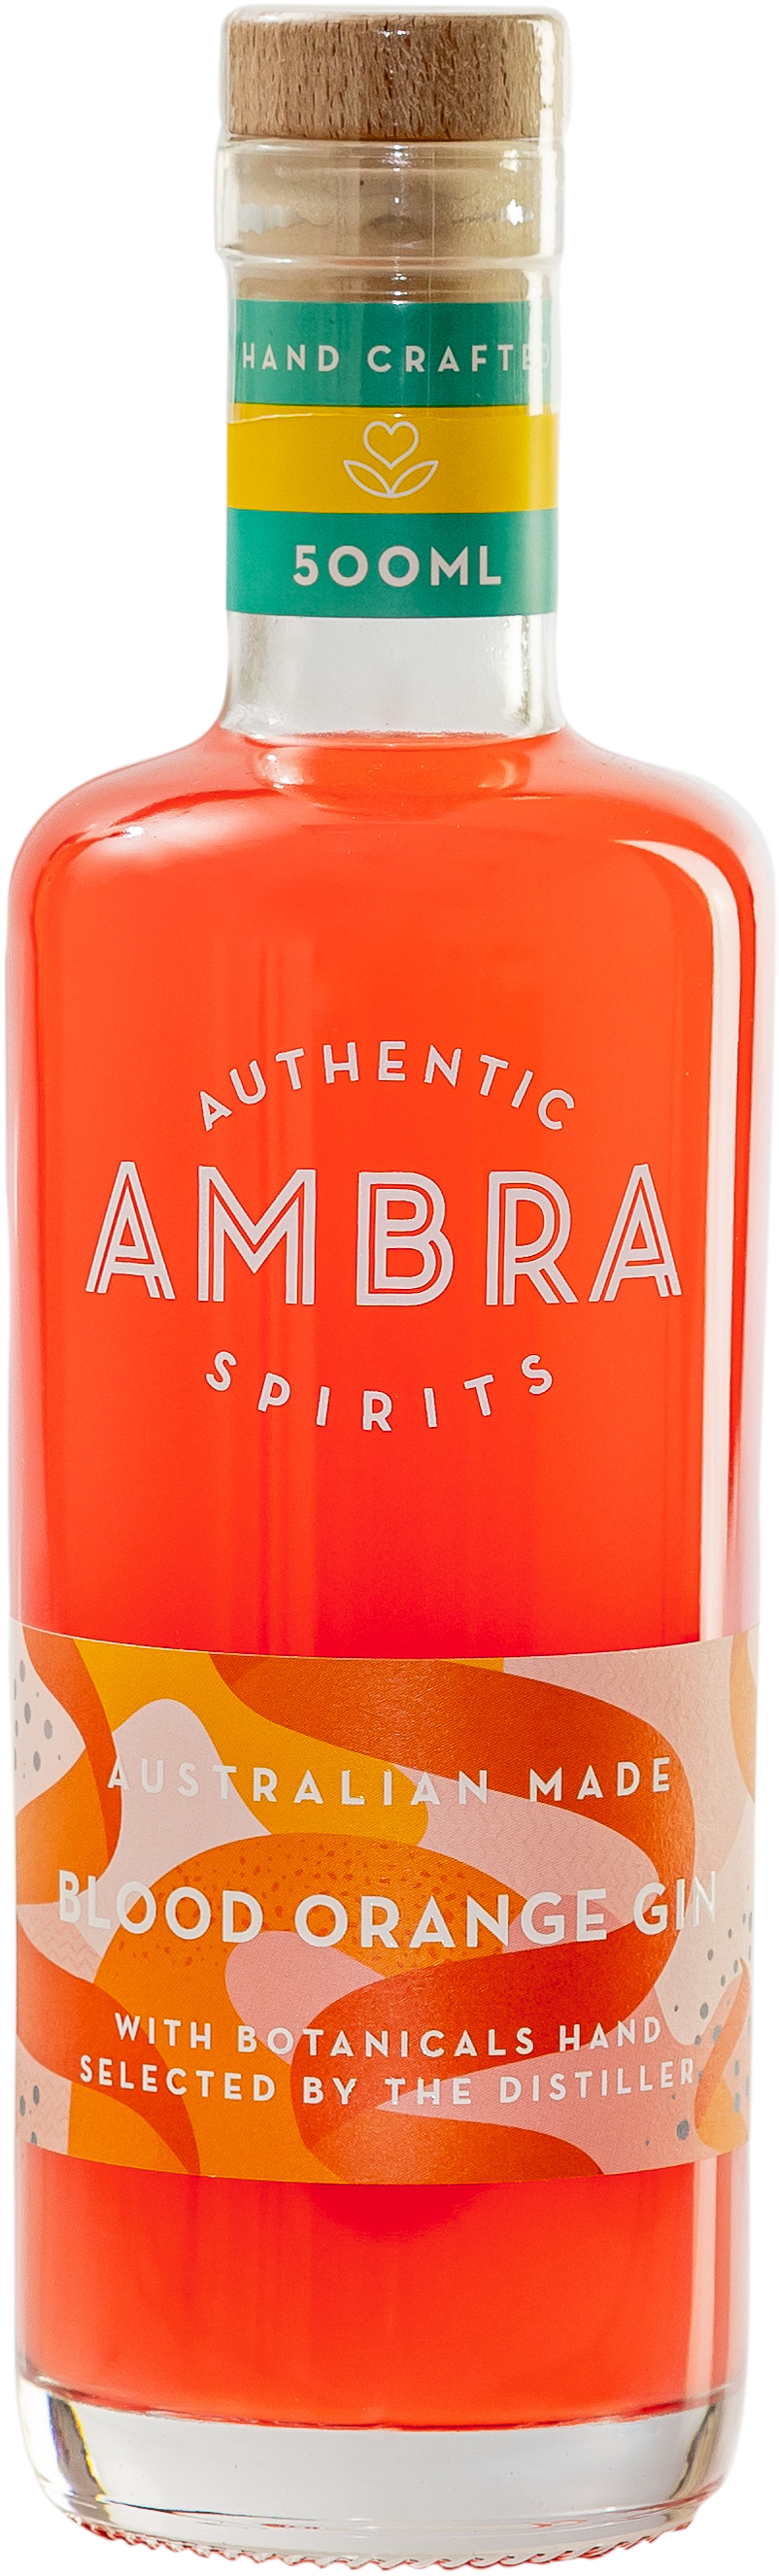 Ambra Blood Orange Gin 500ml